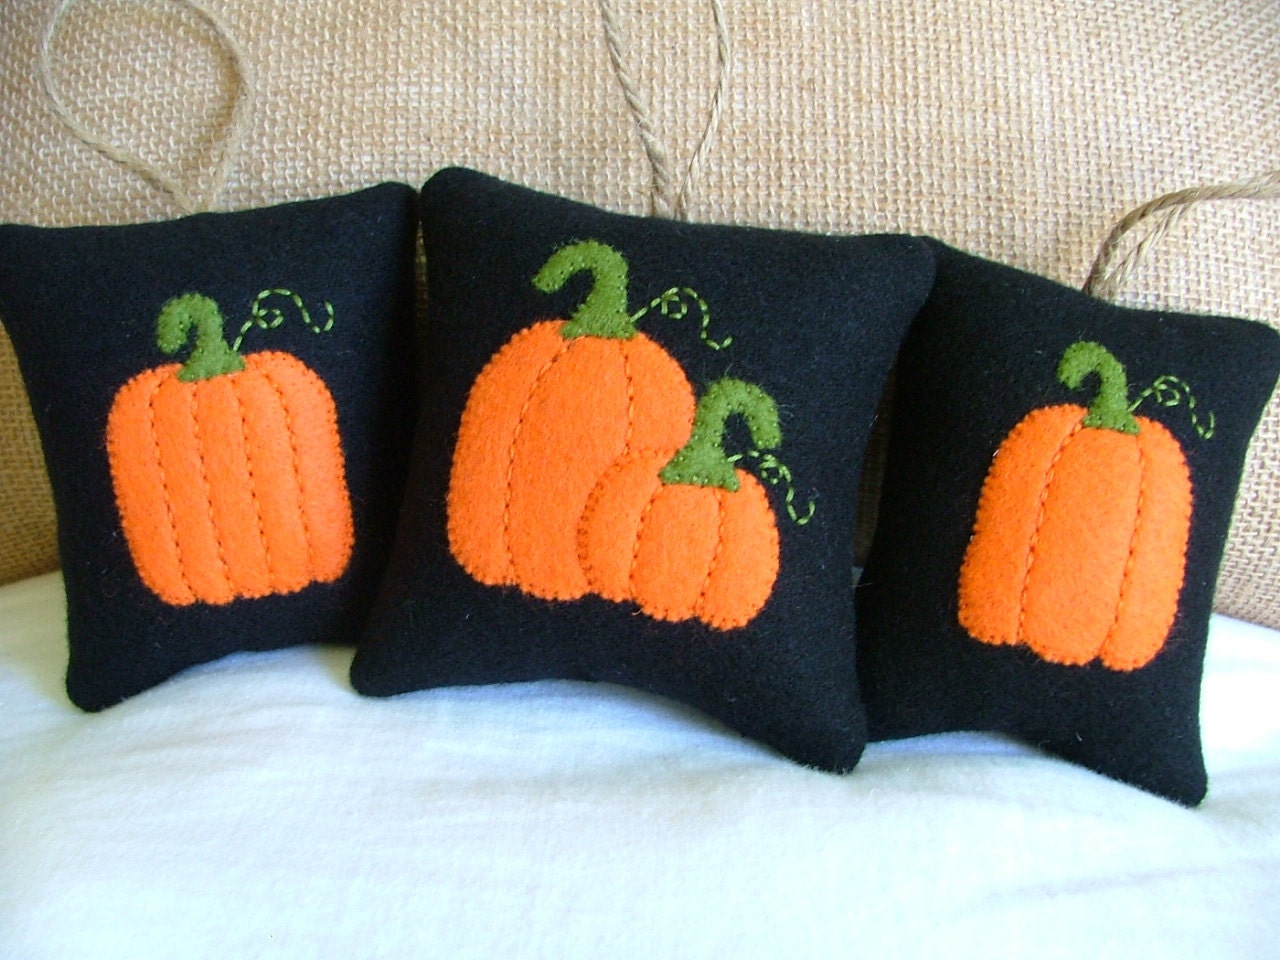 SALE - Autumn Halloween Decor Pumpkins set of 3